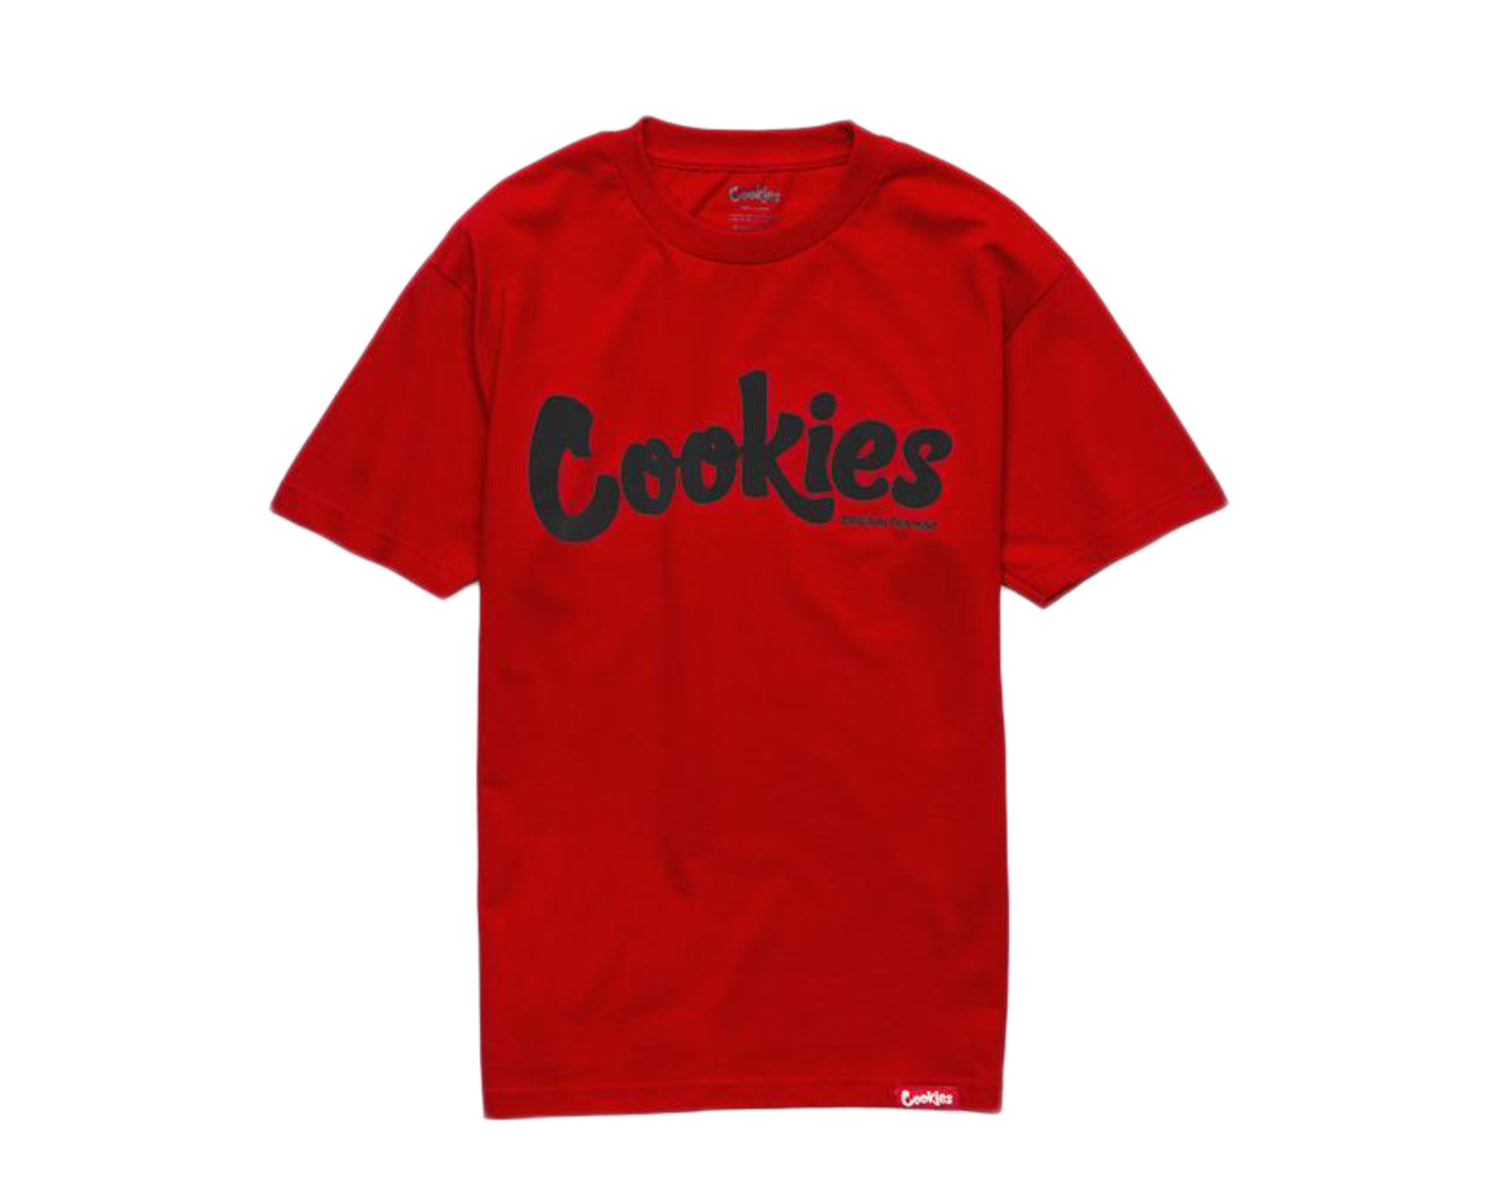 Cookies Original Logo Thin Mint Men's Tee Shirt